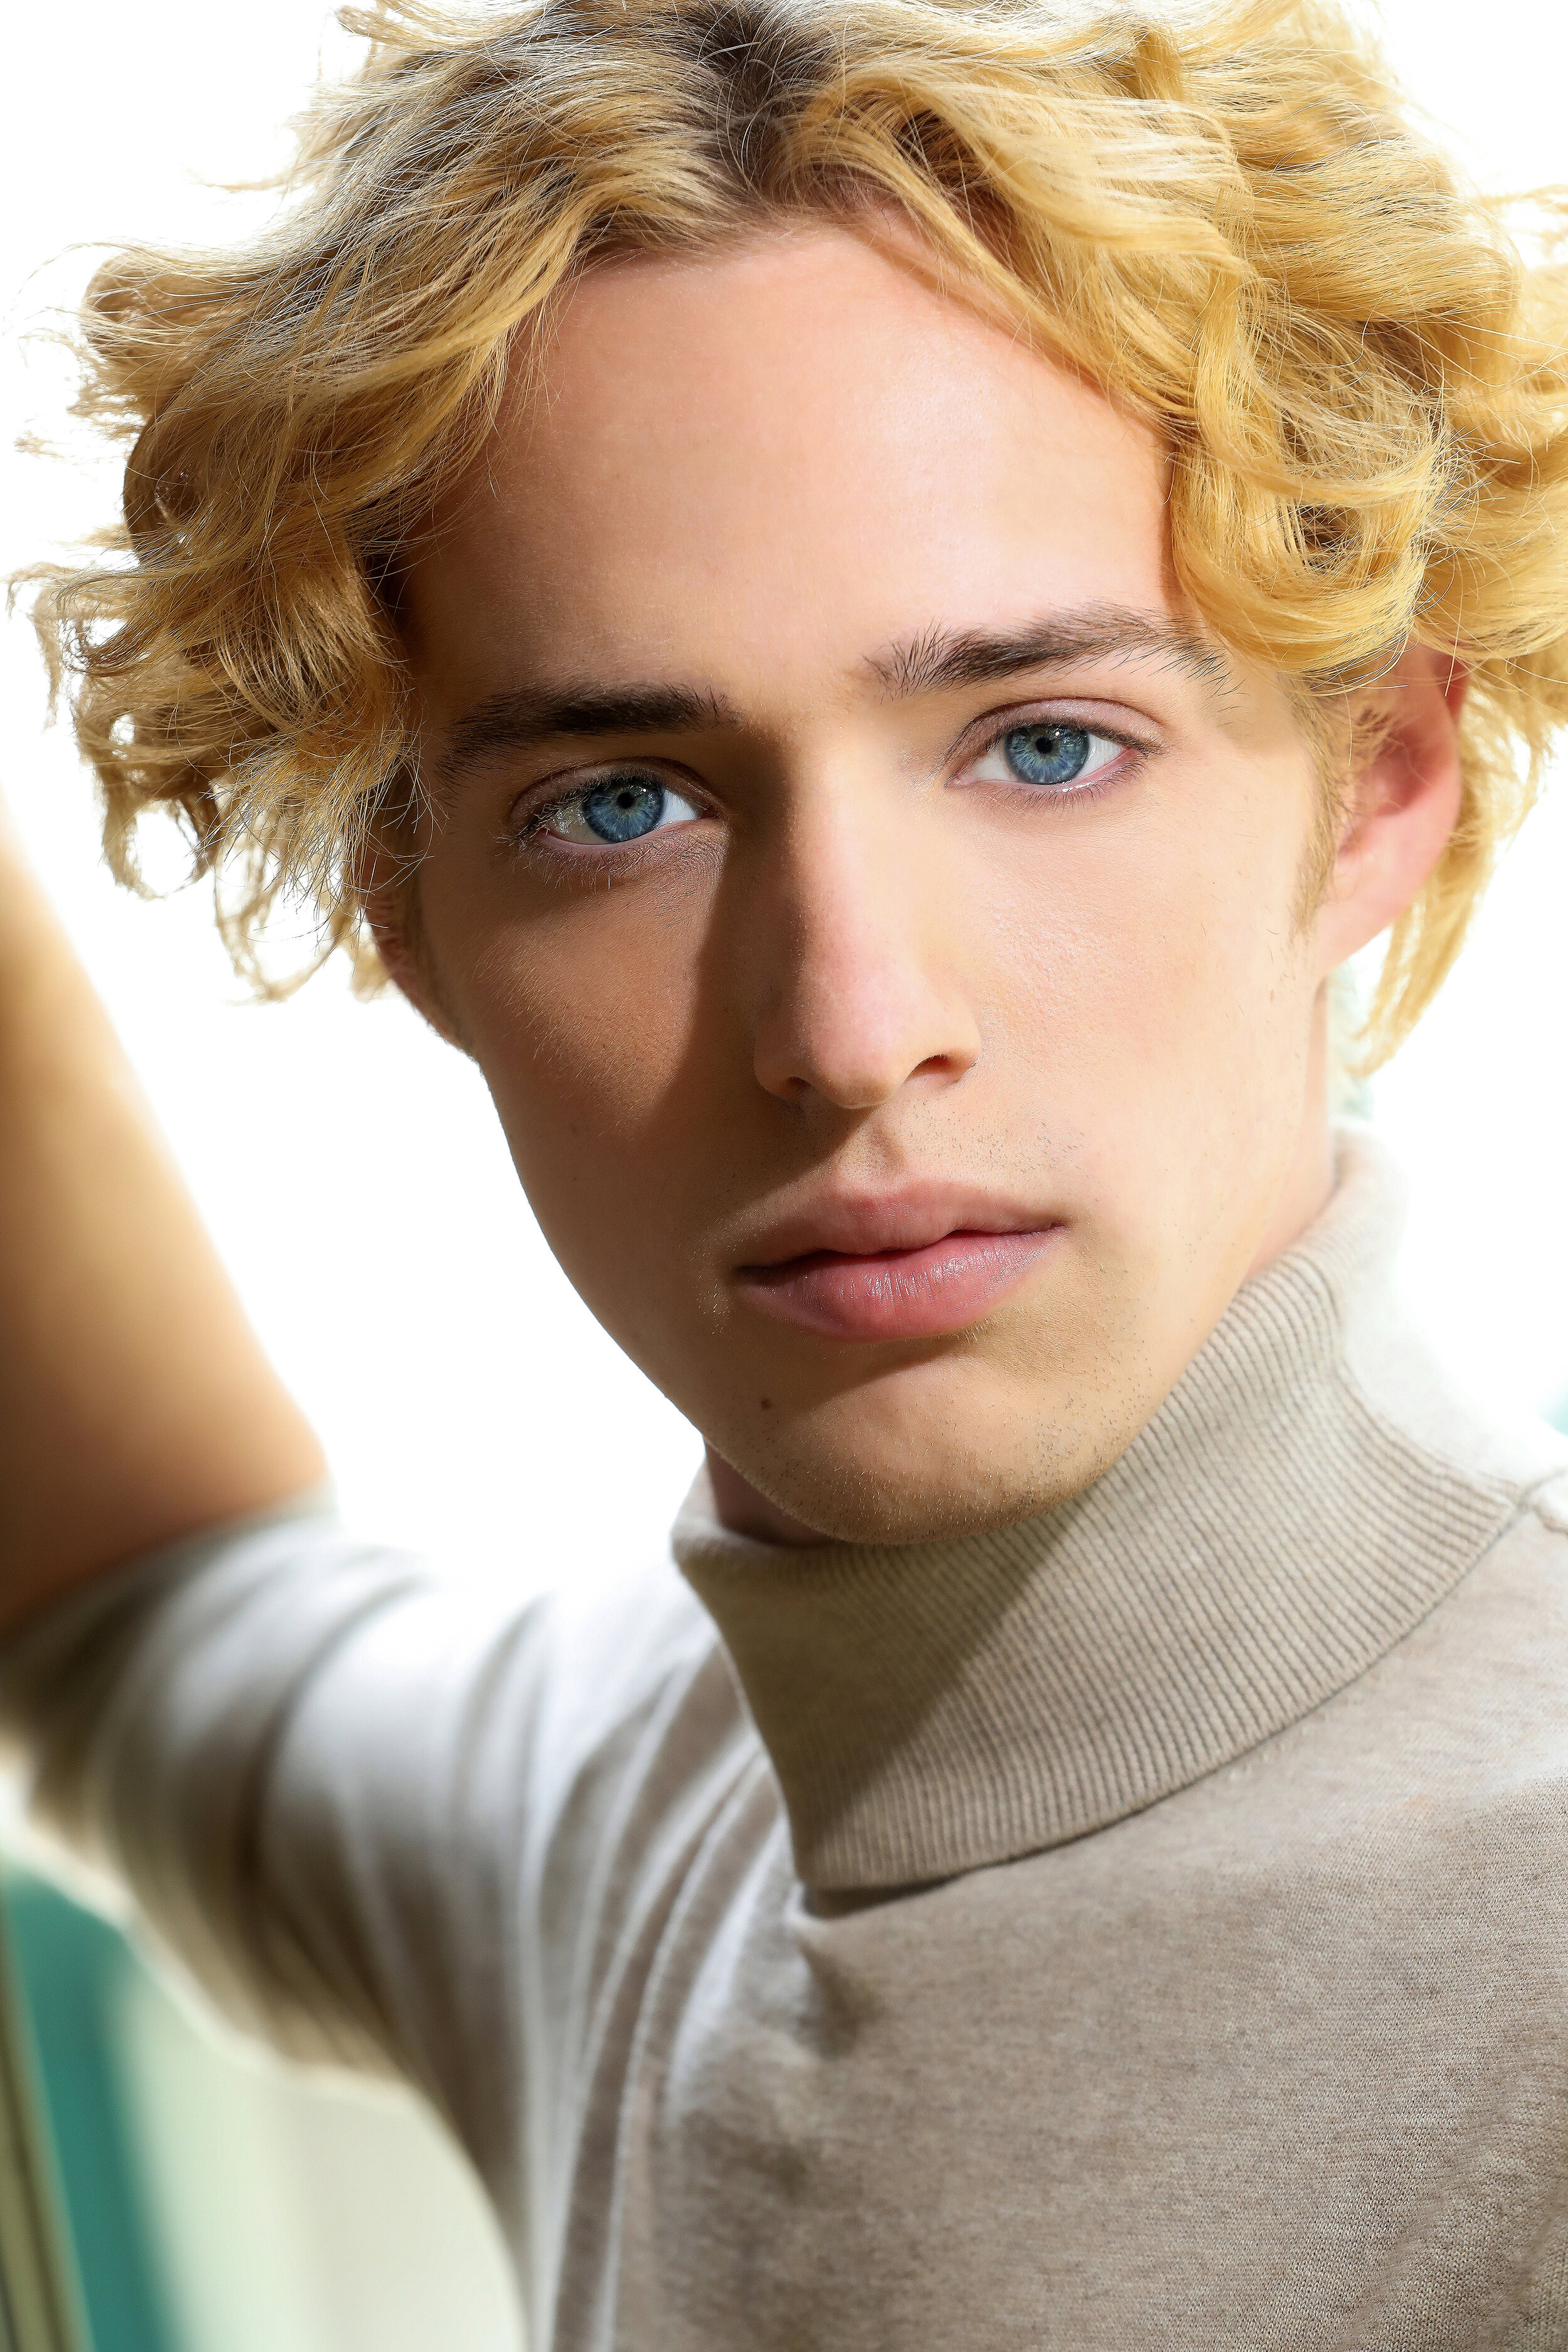 Blond hair and blue eyes